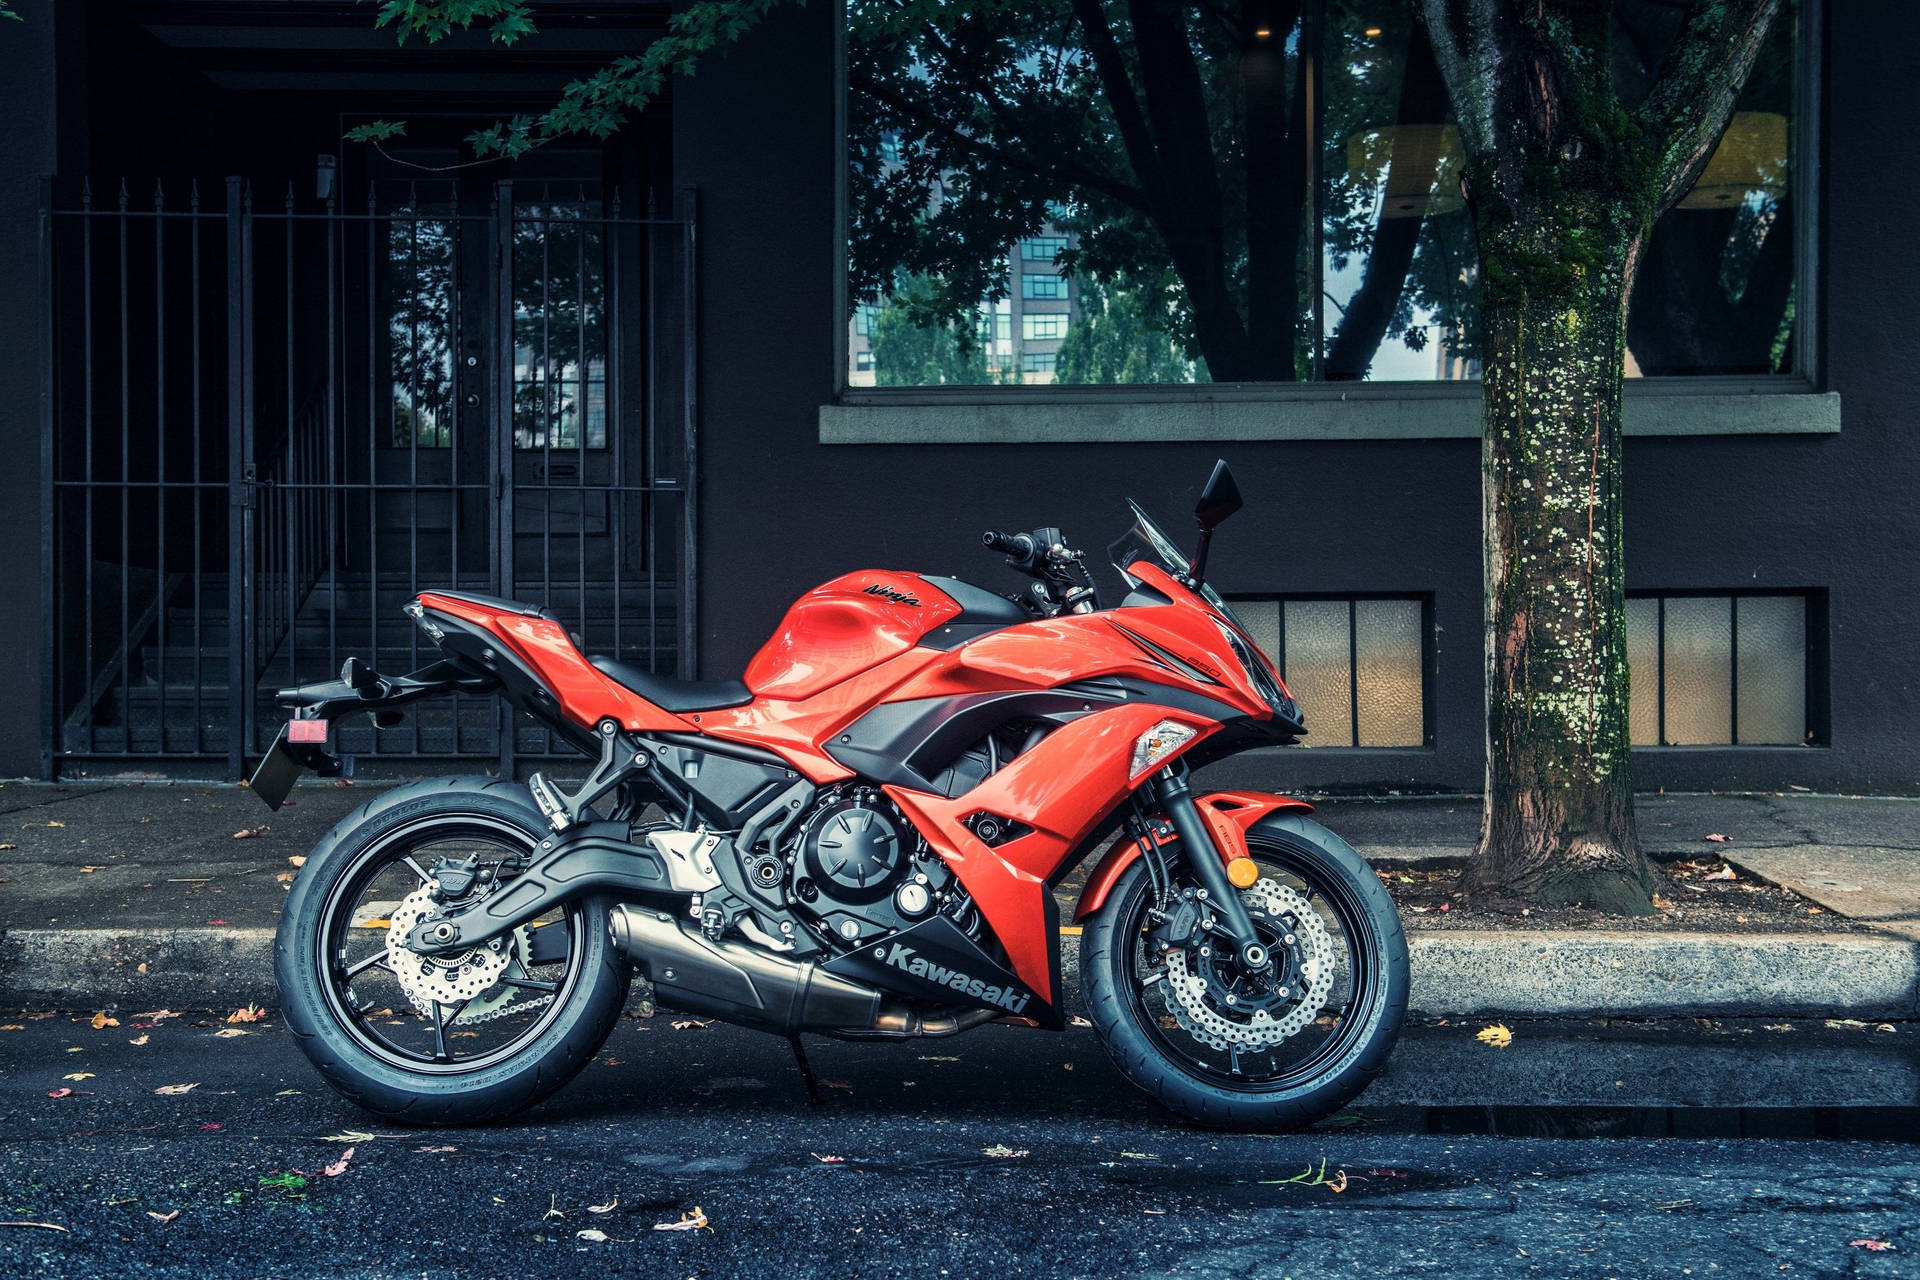 Caption: Majestic Red Kawasaki H2r Motorcycle